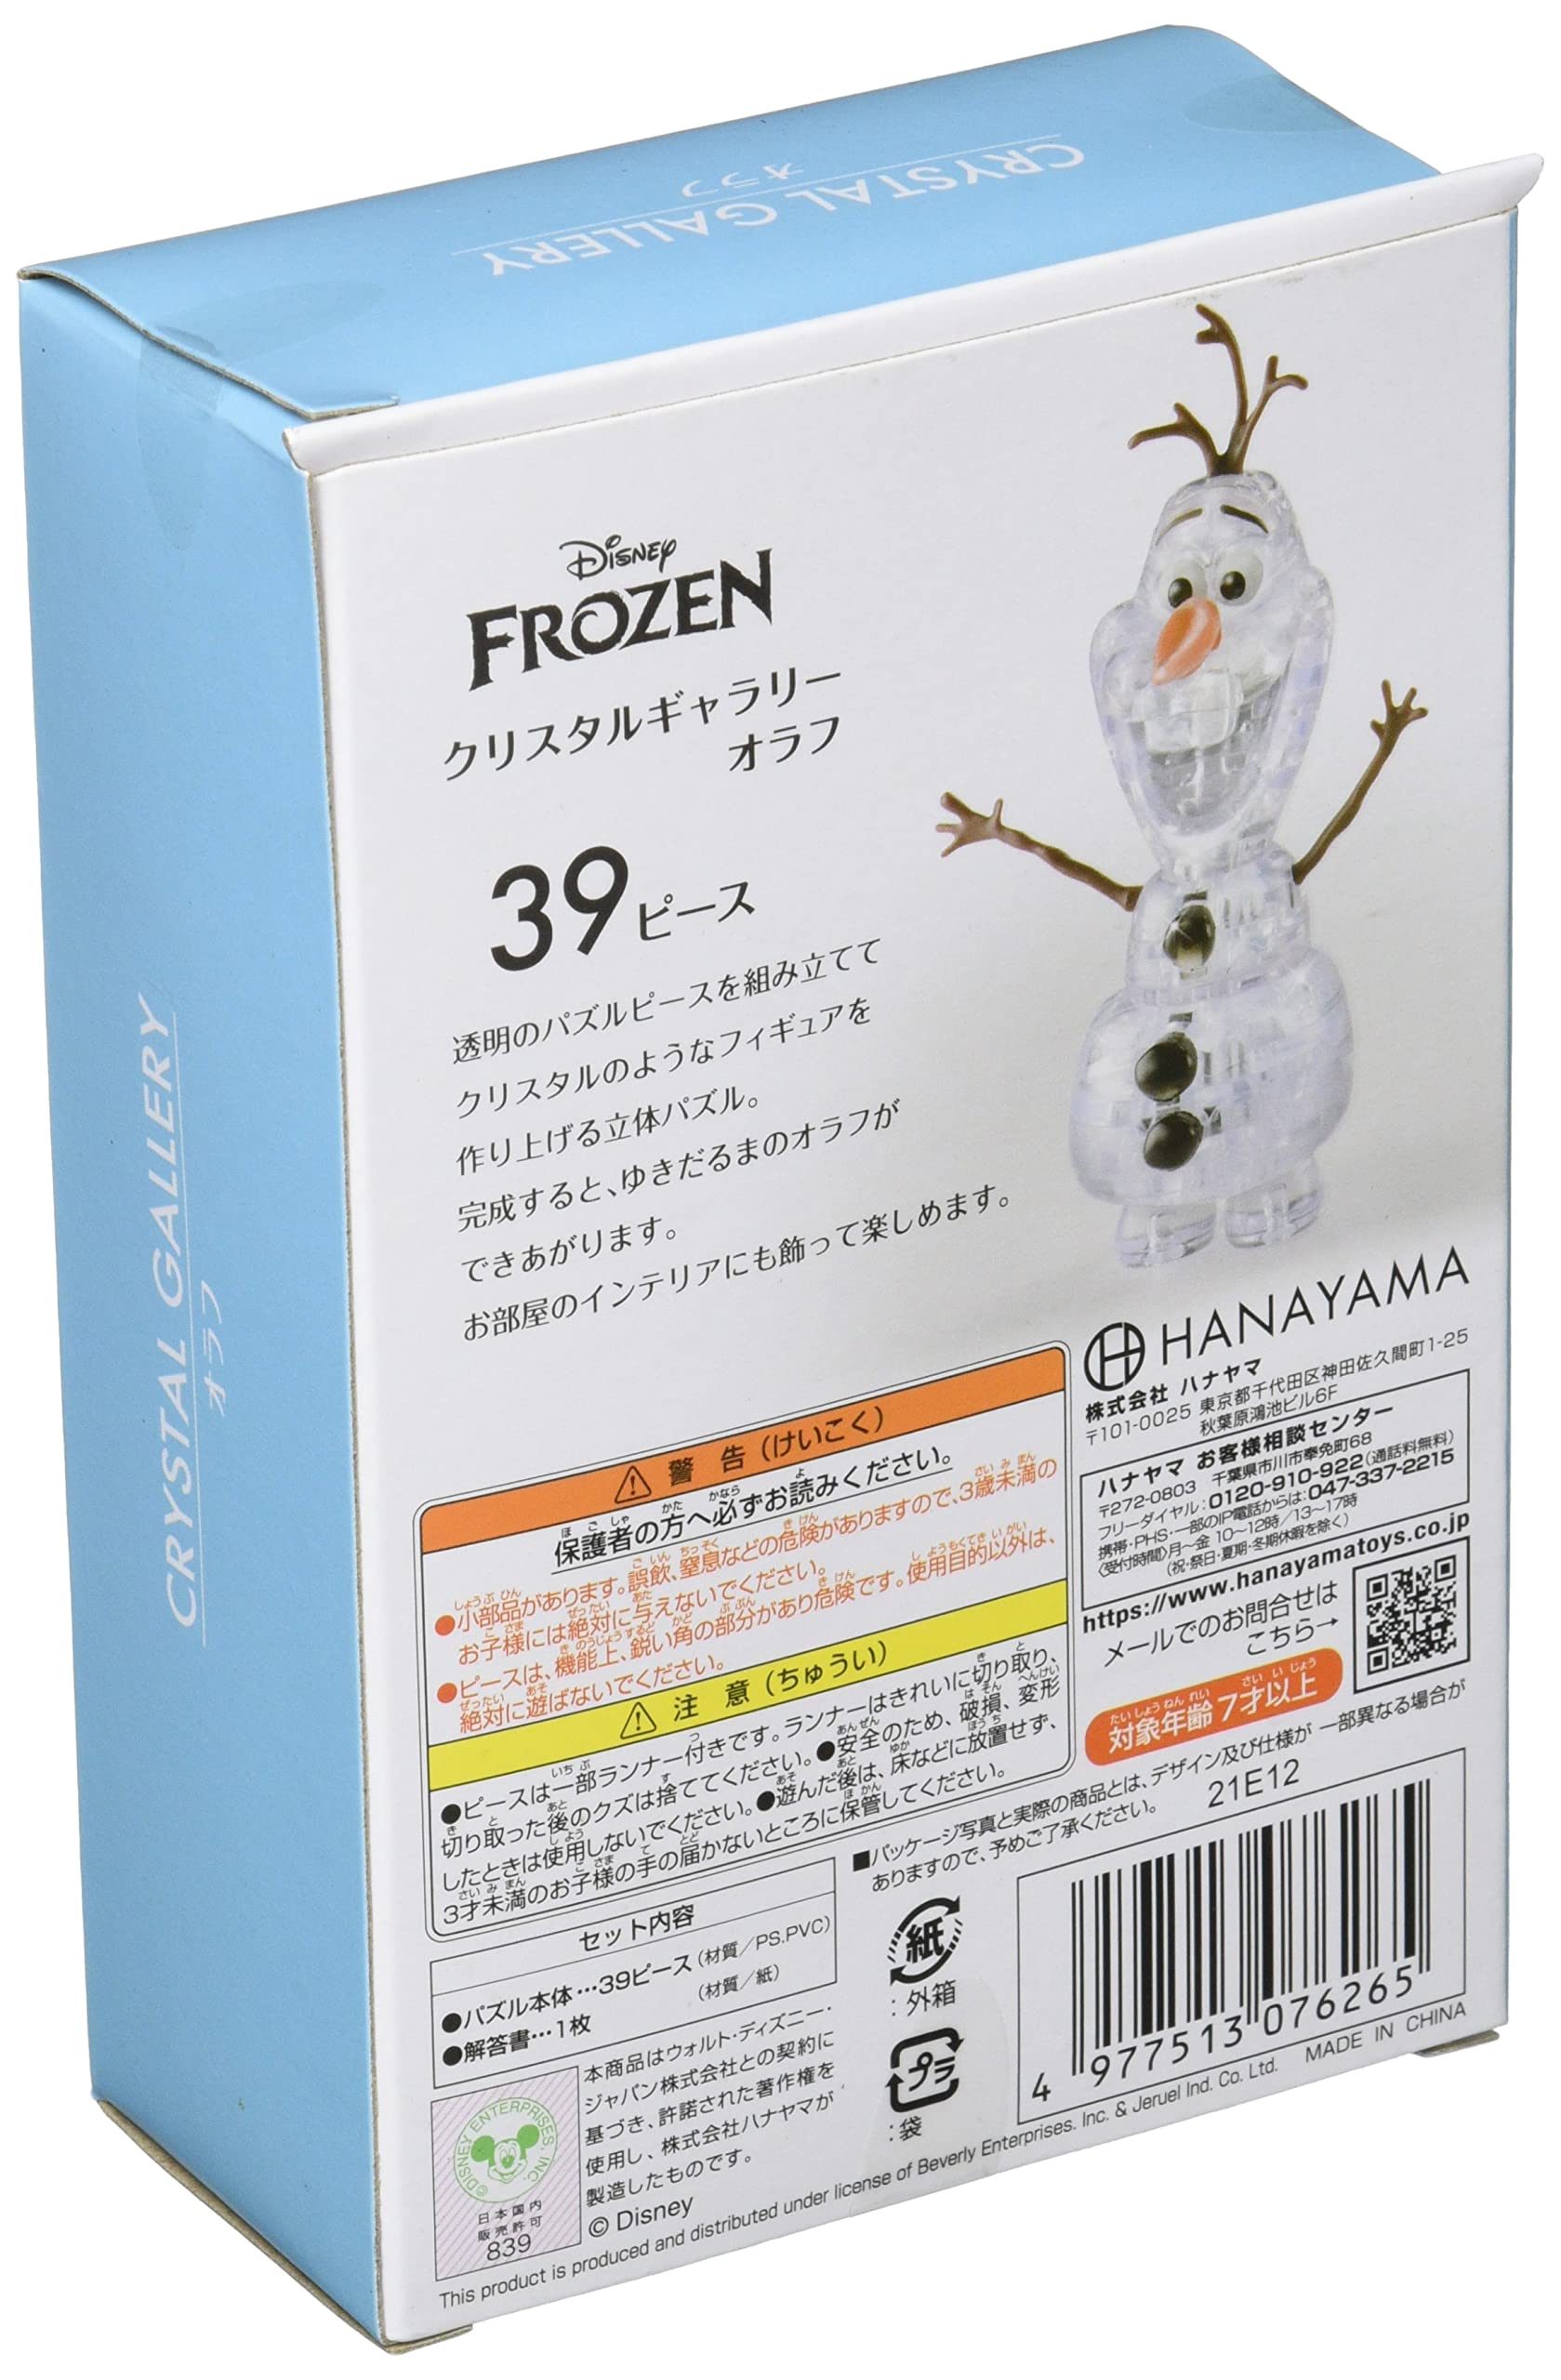 Hanayama Crystal Gallery 3D Puzzle Disney Frozen Olaf 39 Pieces Japanese 3D Puzzle Figure